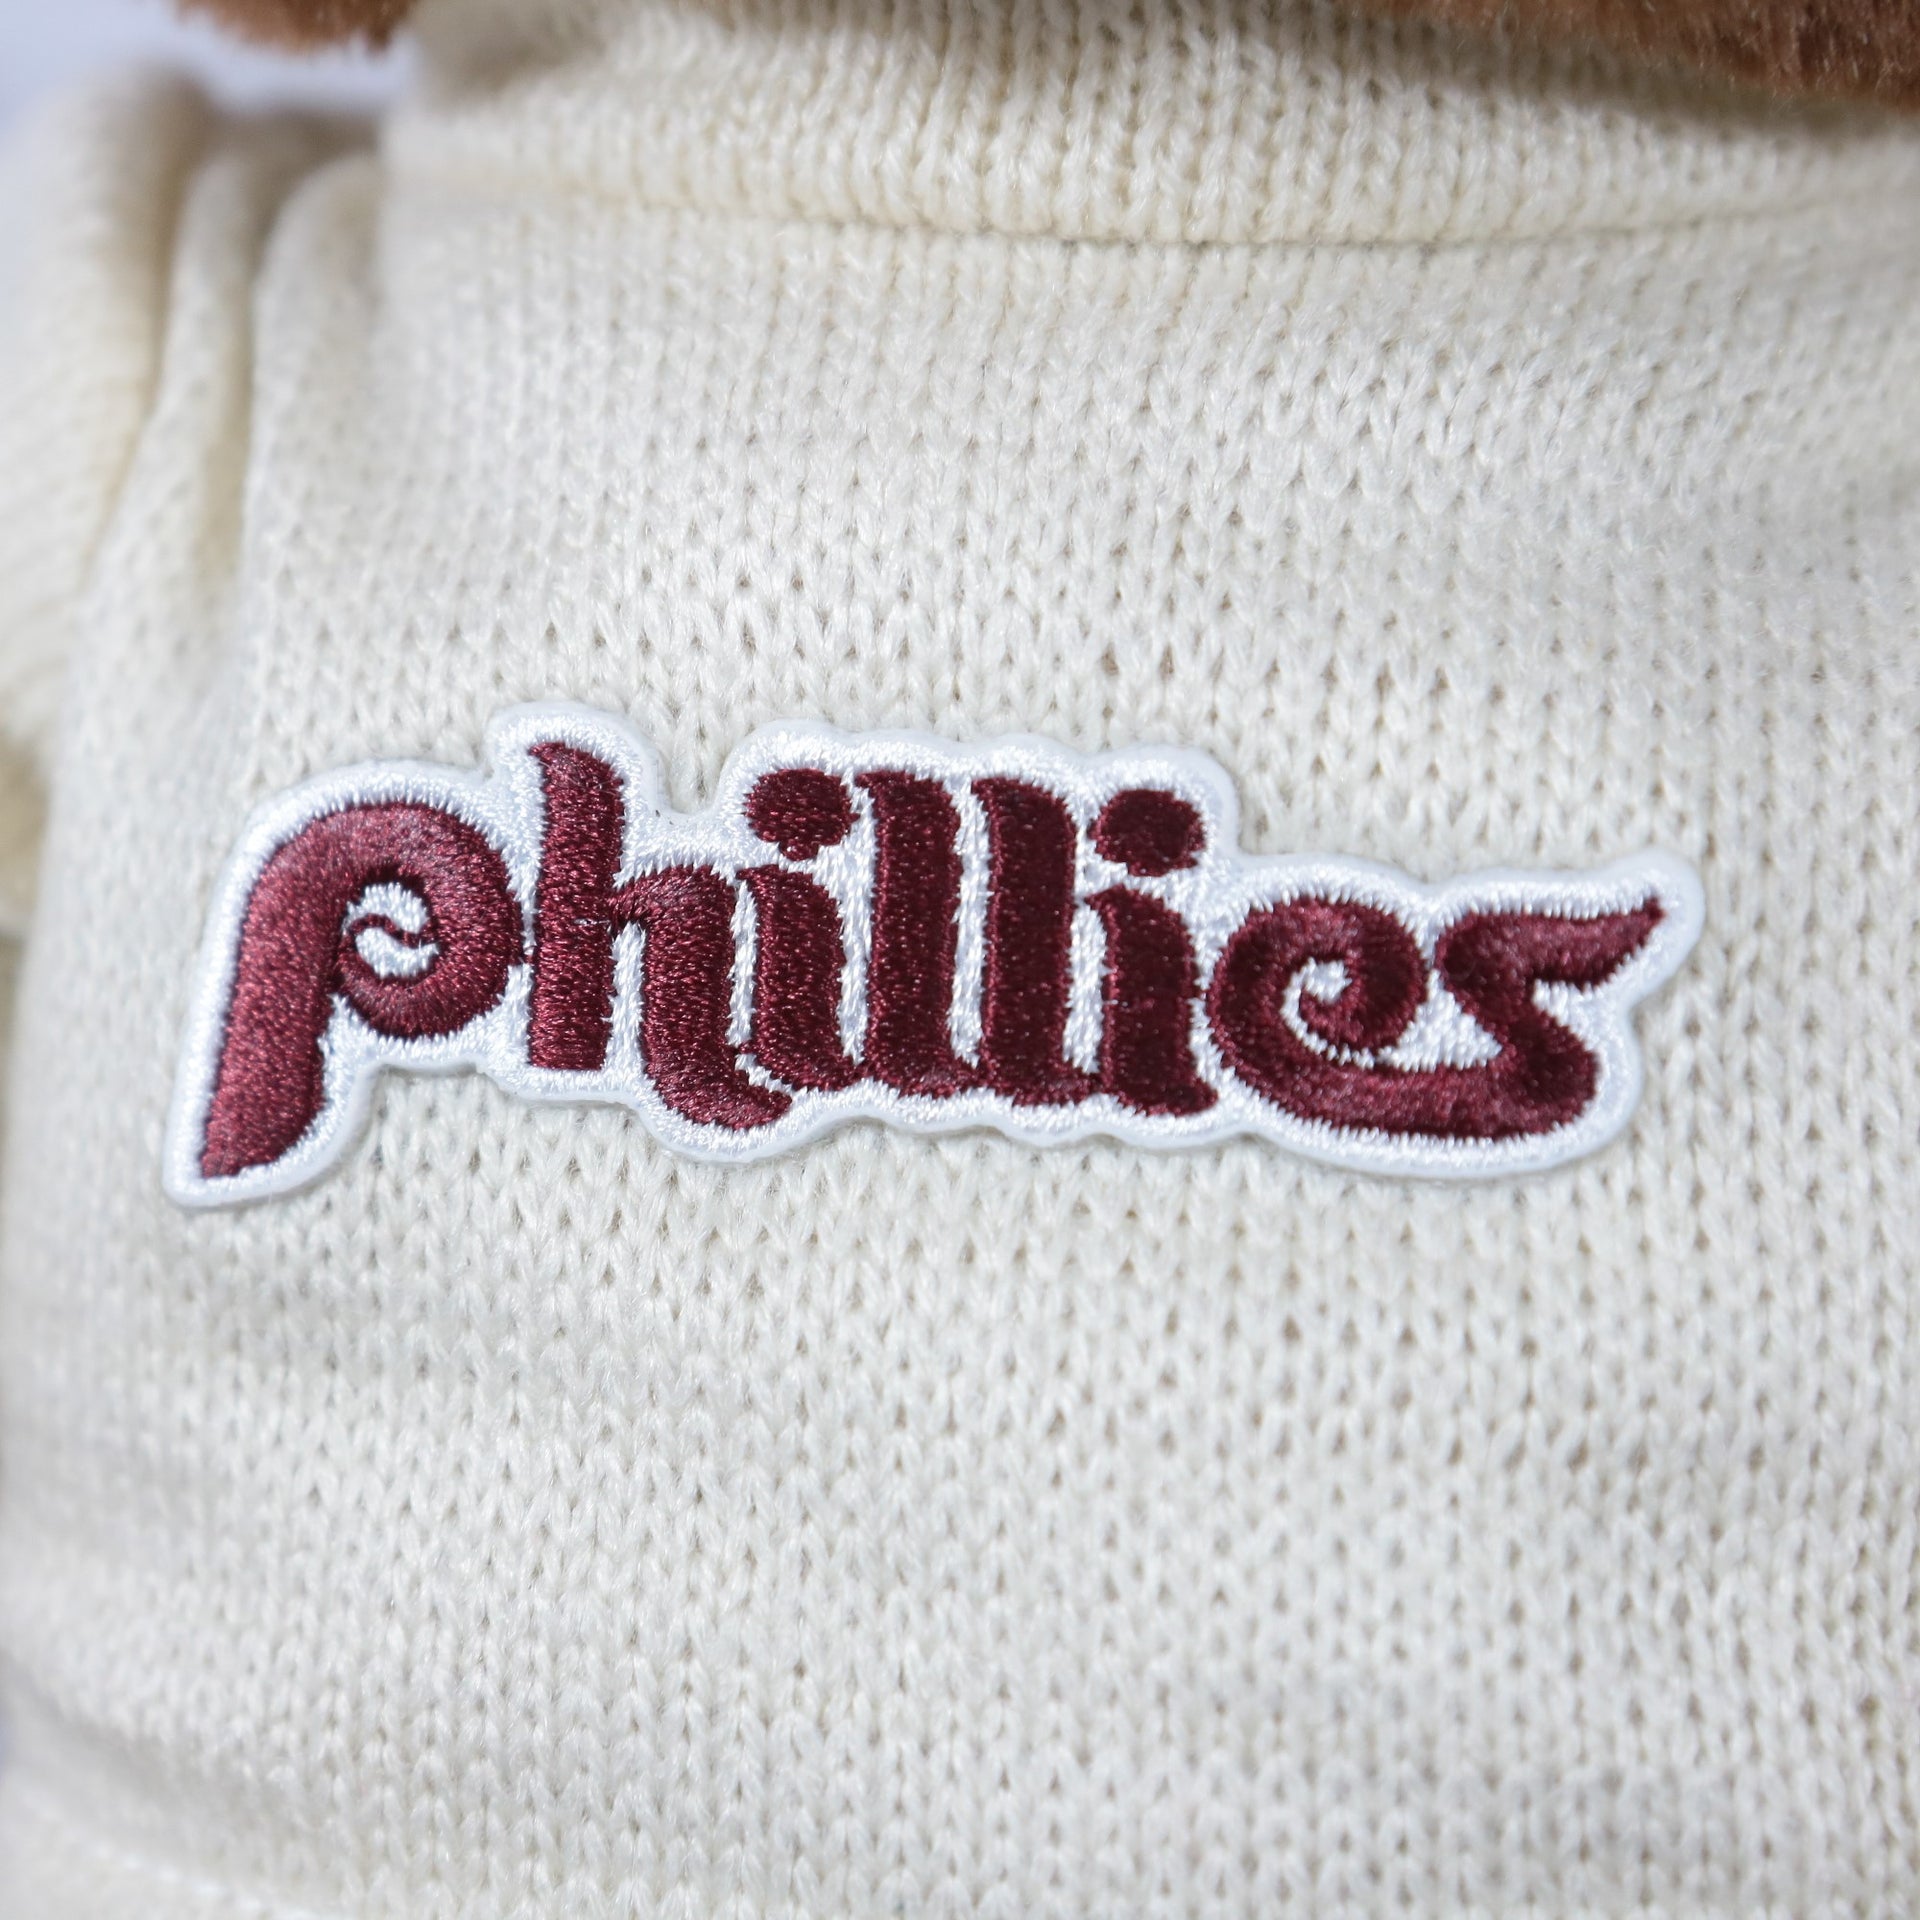 phillies wordmark on the Philadelphia Phillies Fuzzy Wuzzy "Phillies" Cooperstown wordmark Cream Sweater | Dark Brown Teddy Bear